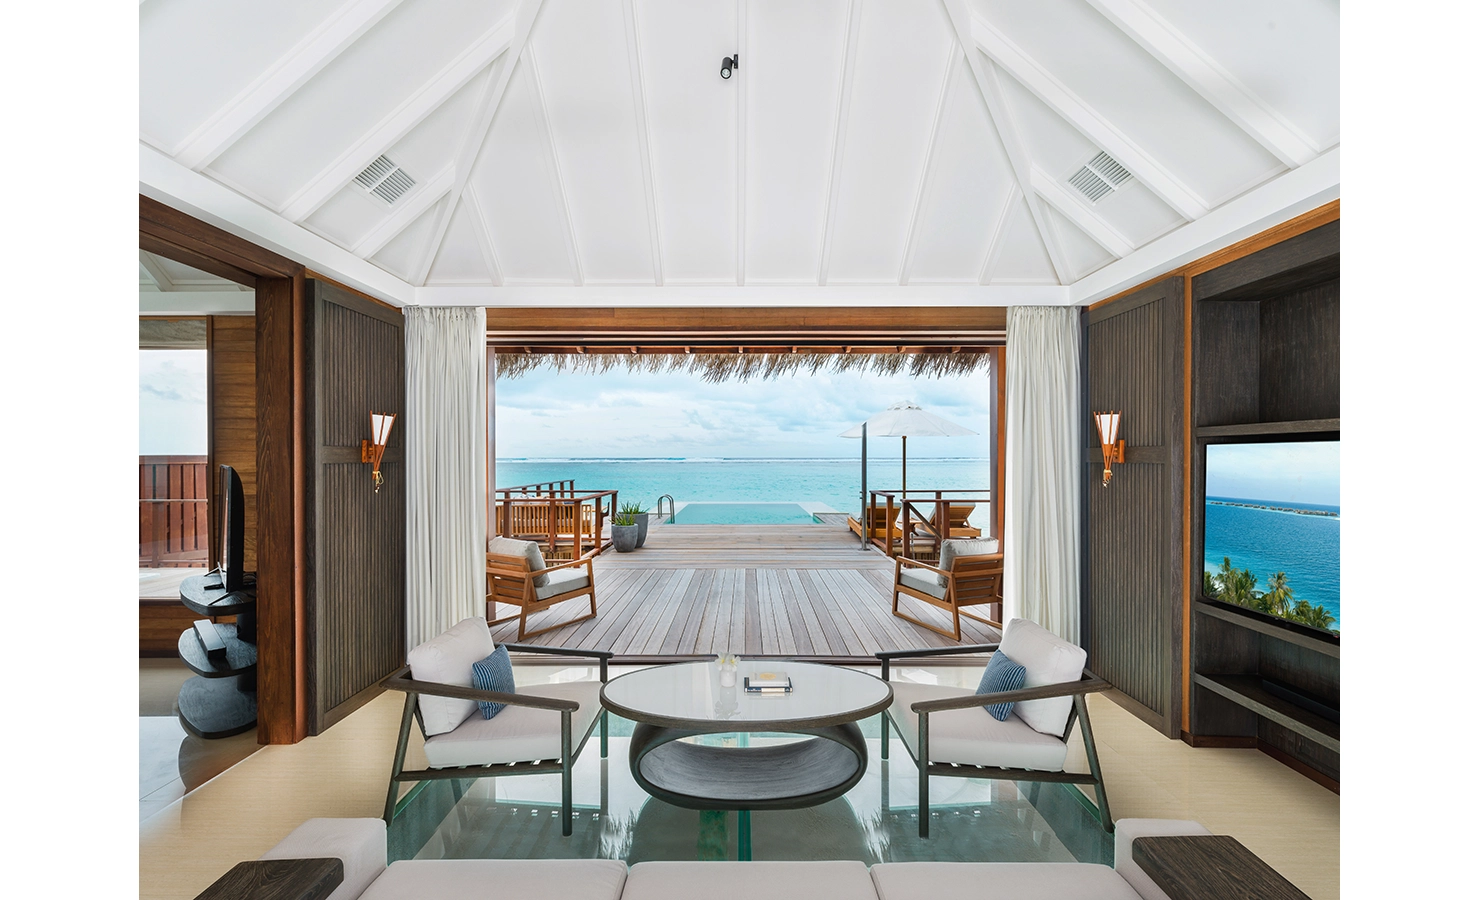 Perfect Hideaways, Conrad Maldives, Luxury accommodation sunroom, Sitting room